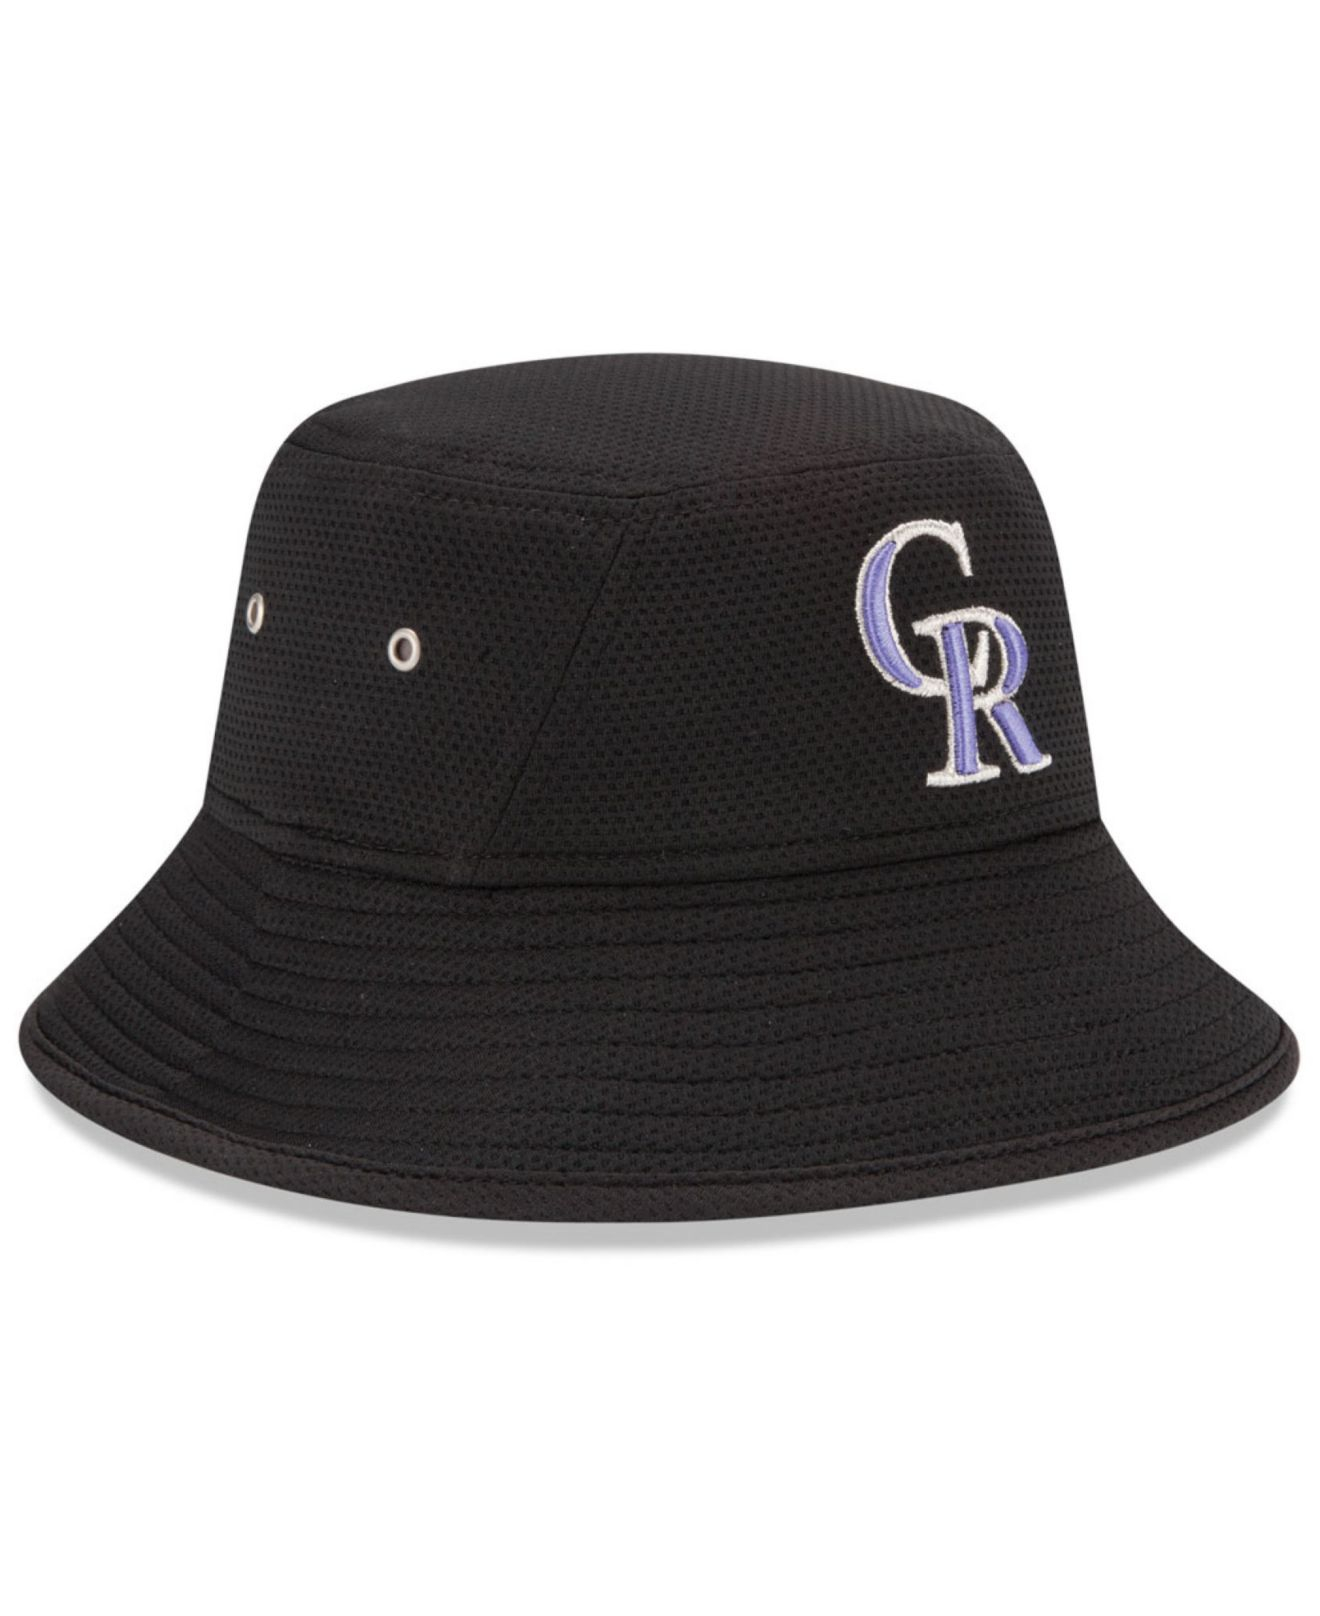 Lyst - Ktz Colorado Rockies Team Redux Bucket Hat in Black for Men